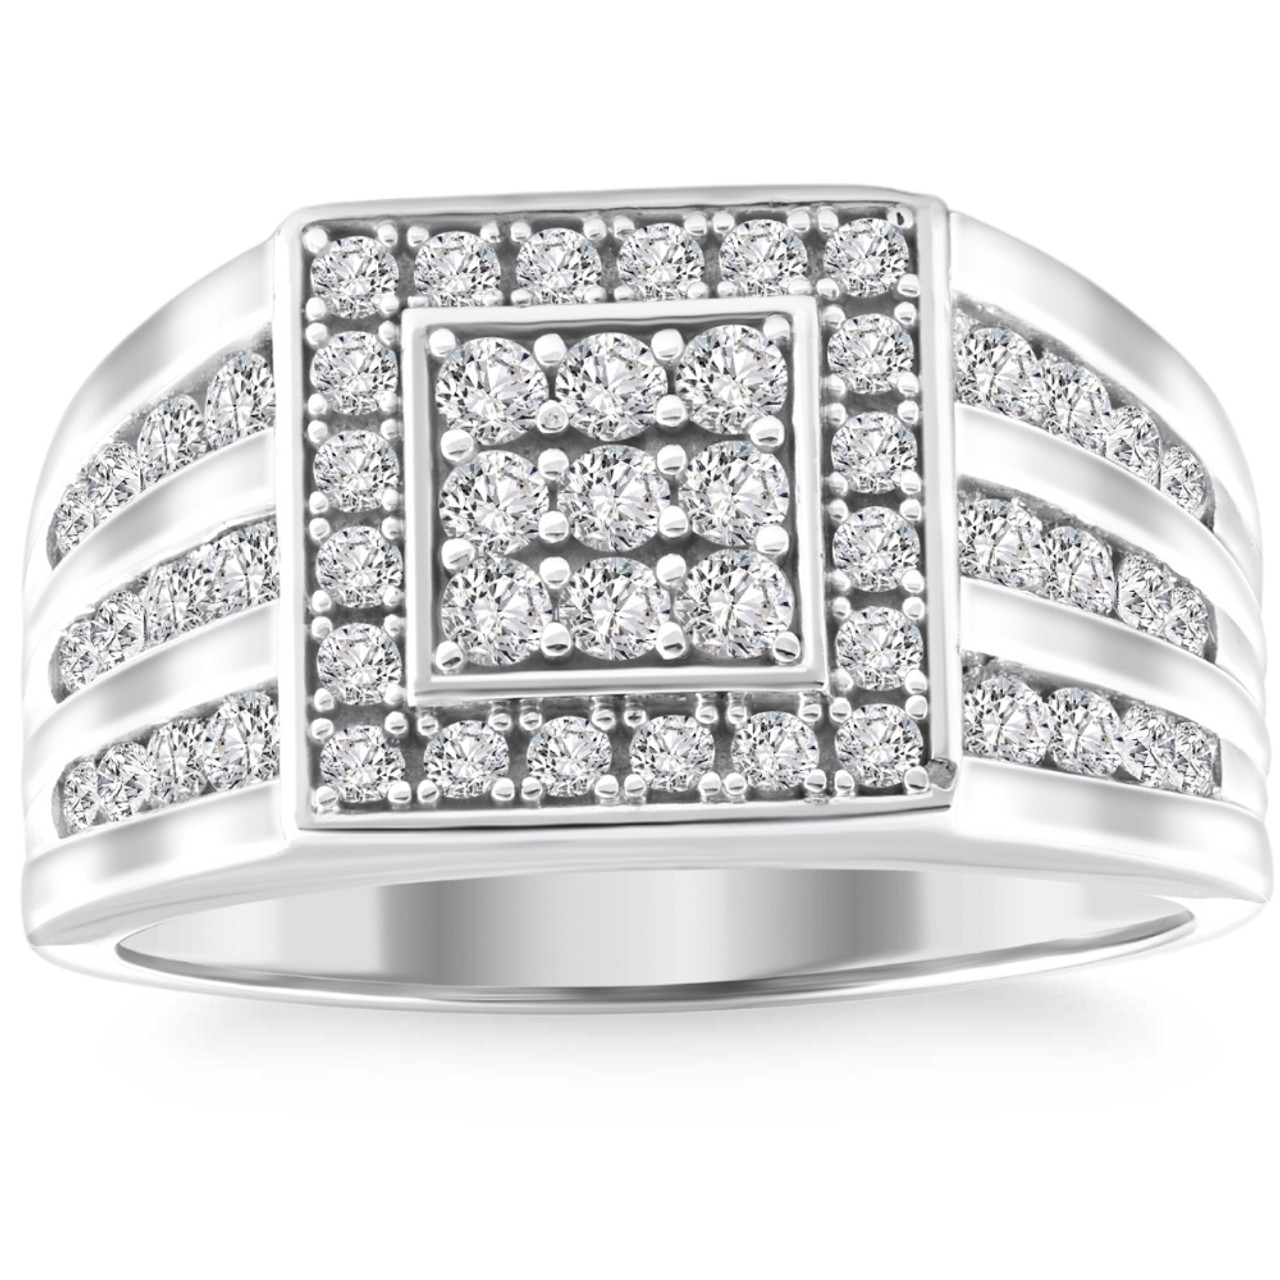 1Ct TW Diamond Men's Anniversary Wedding Ring High Polished Band 10k ...